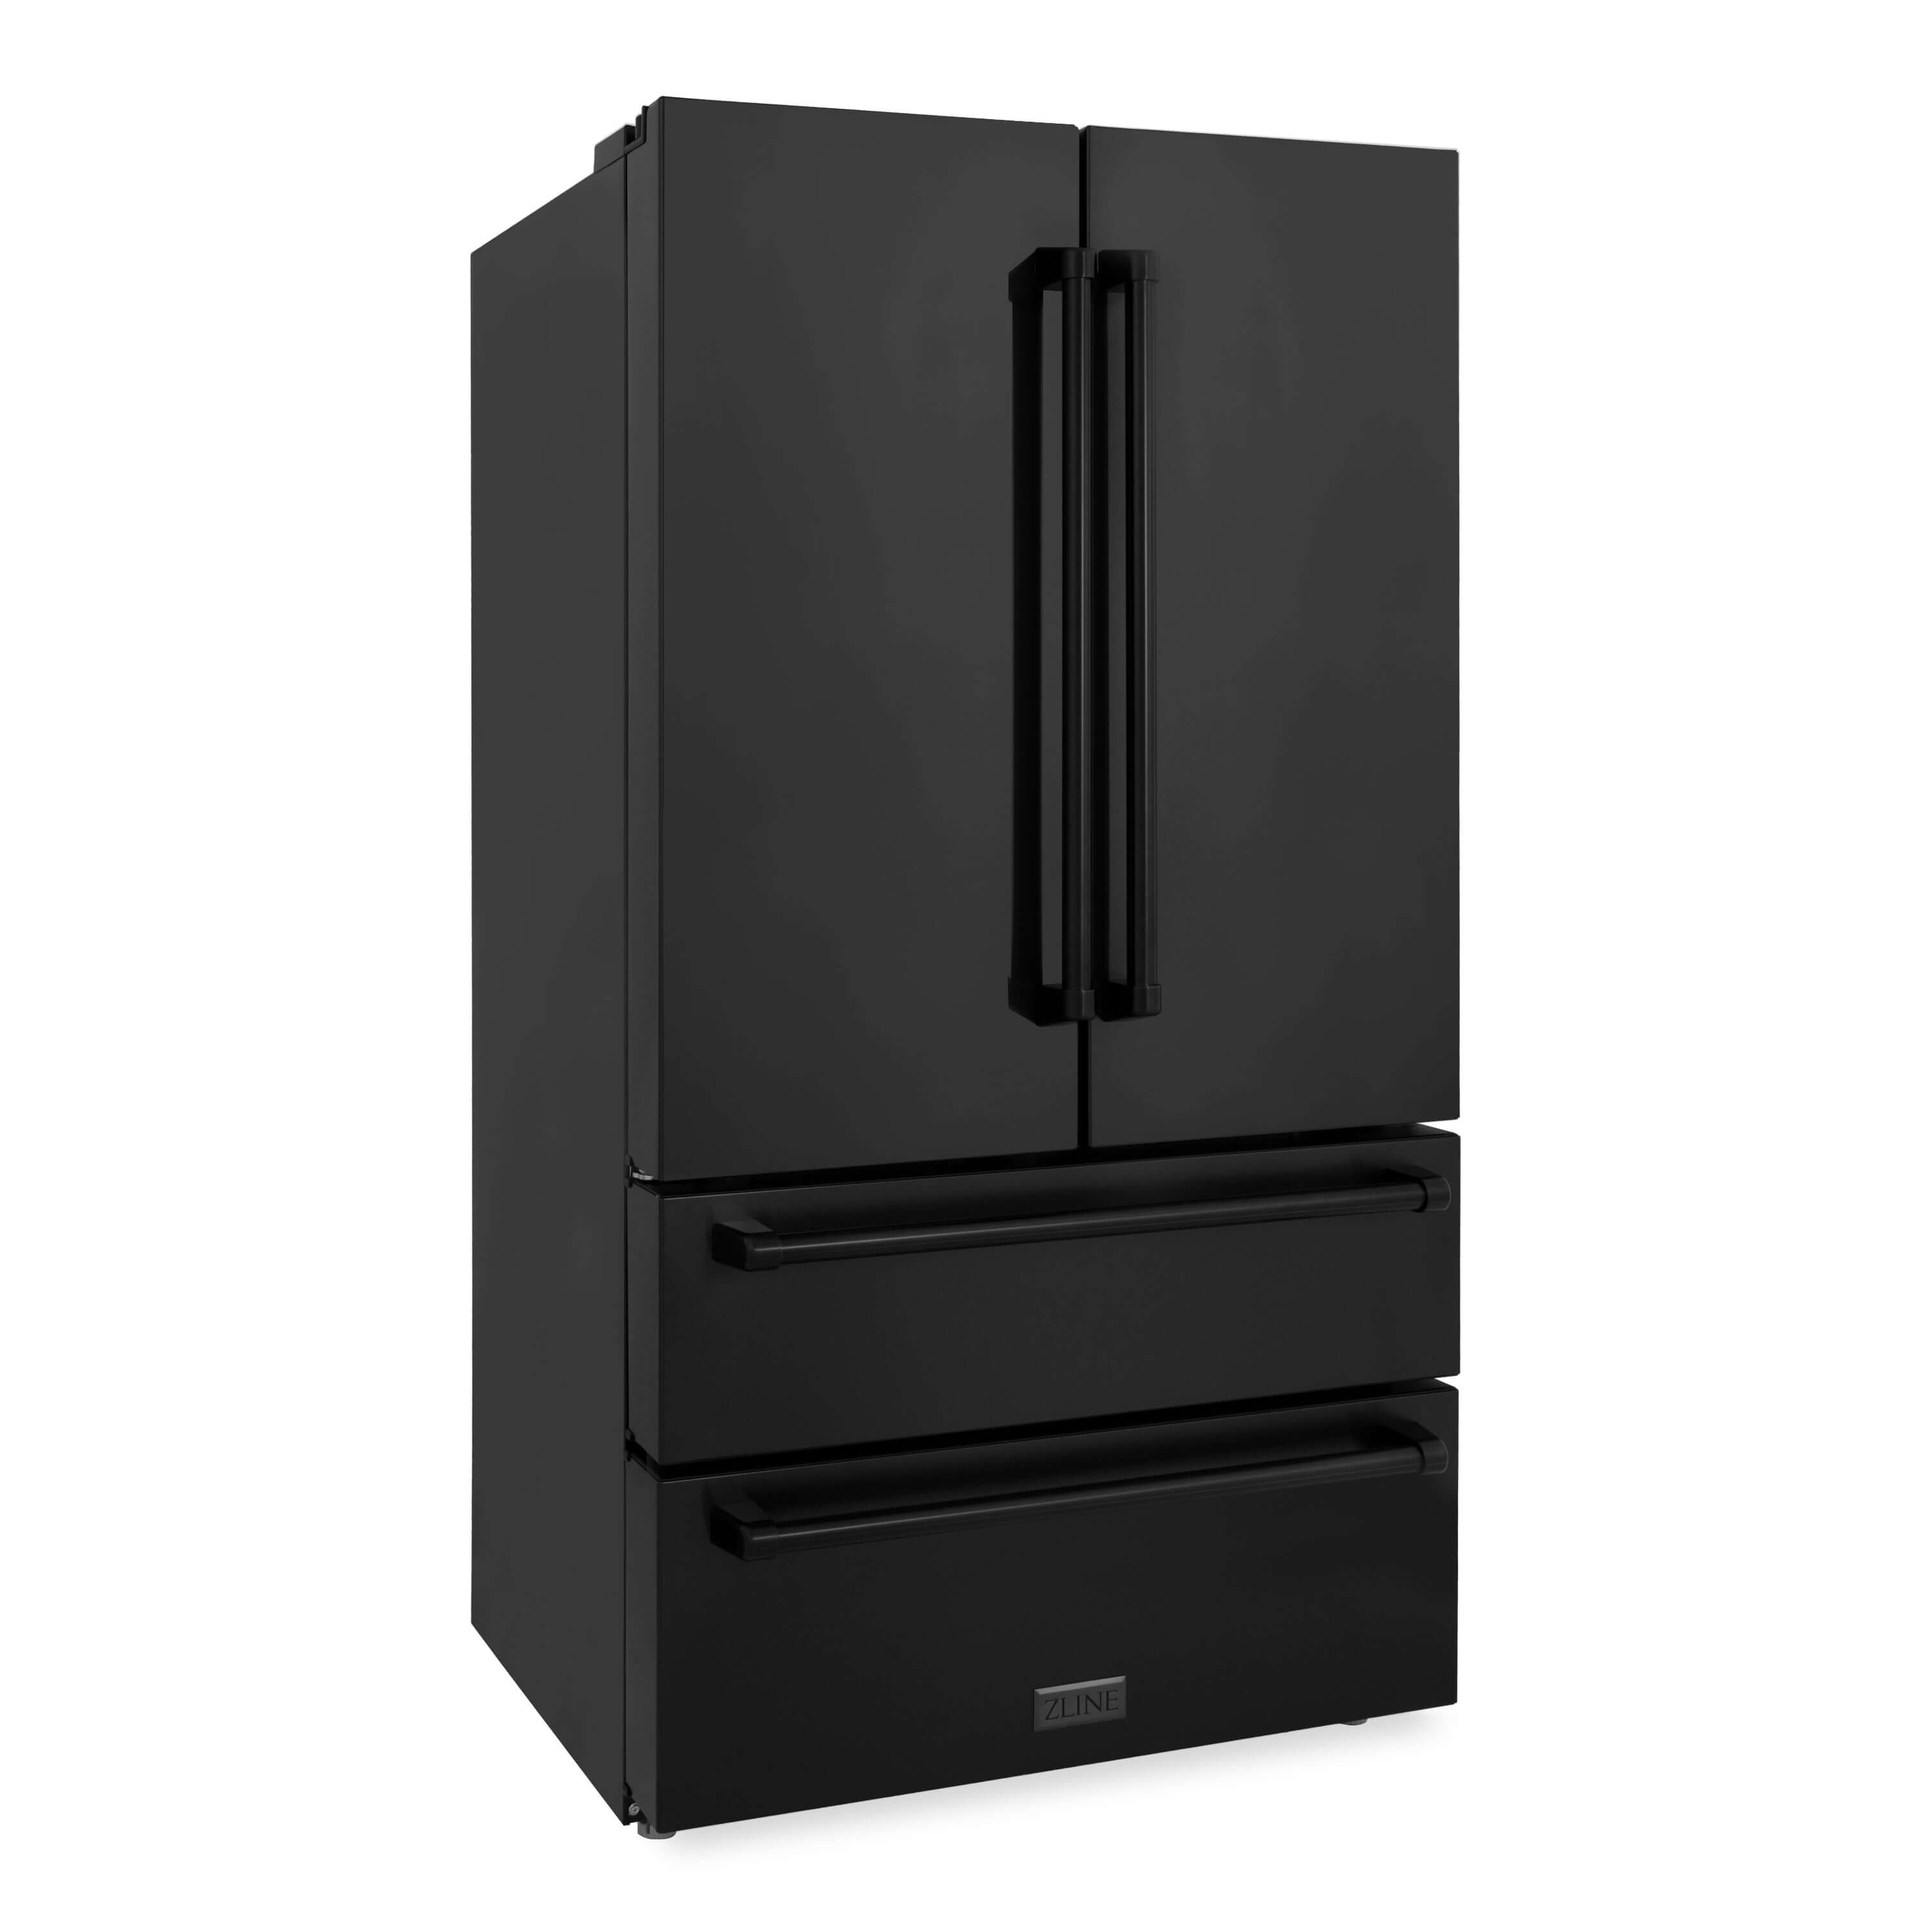 ZLINE 36 in. Black Stainless Steel French Door Refrigerator Side View.